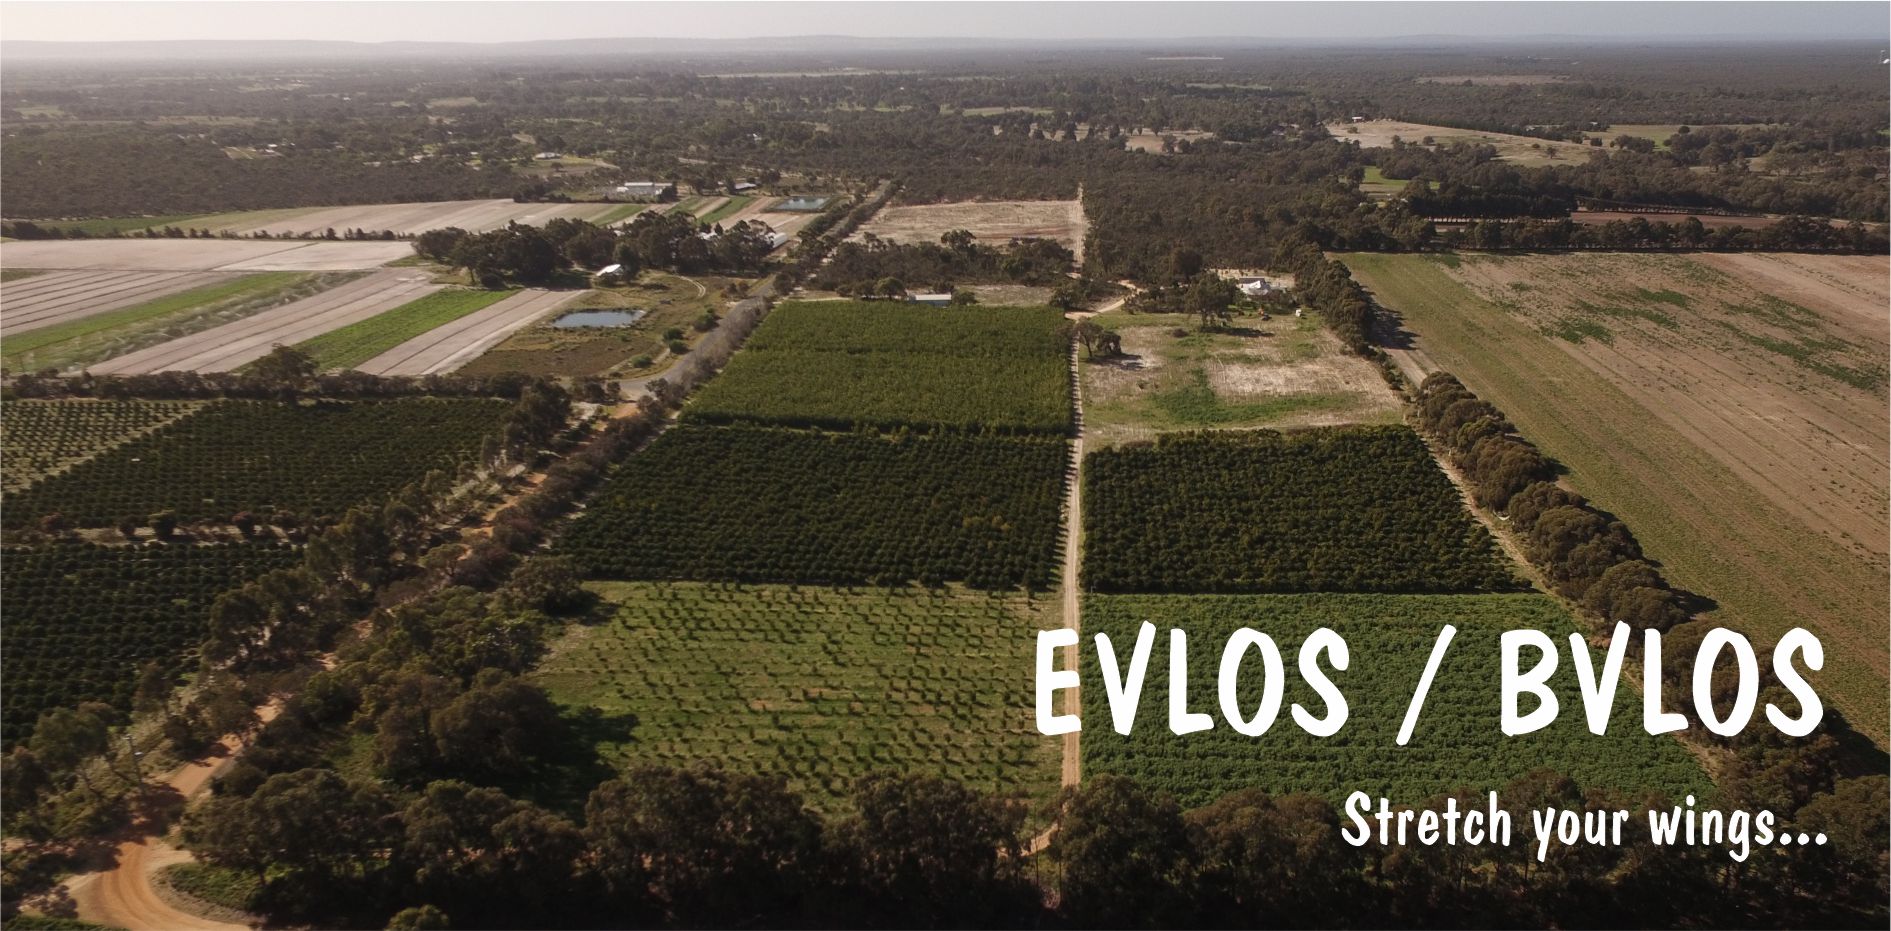 BVLOS / EVLOS - Expand your horizon